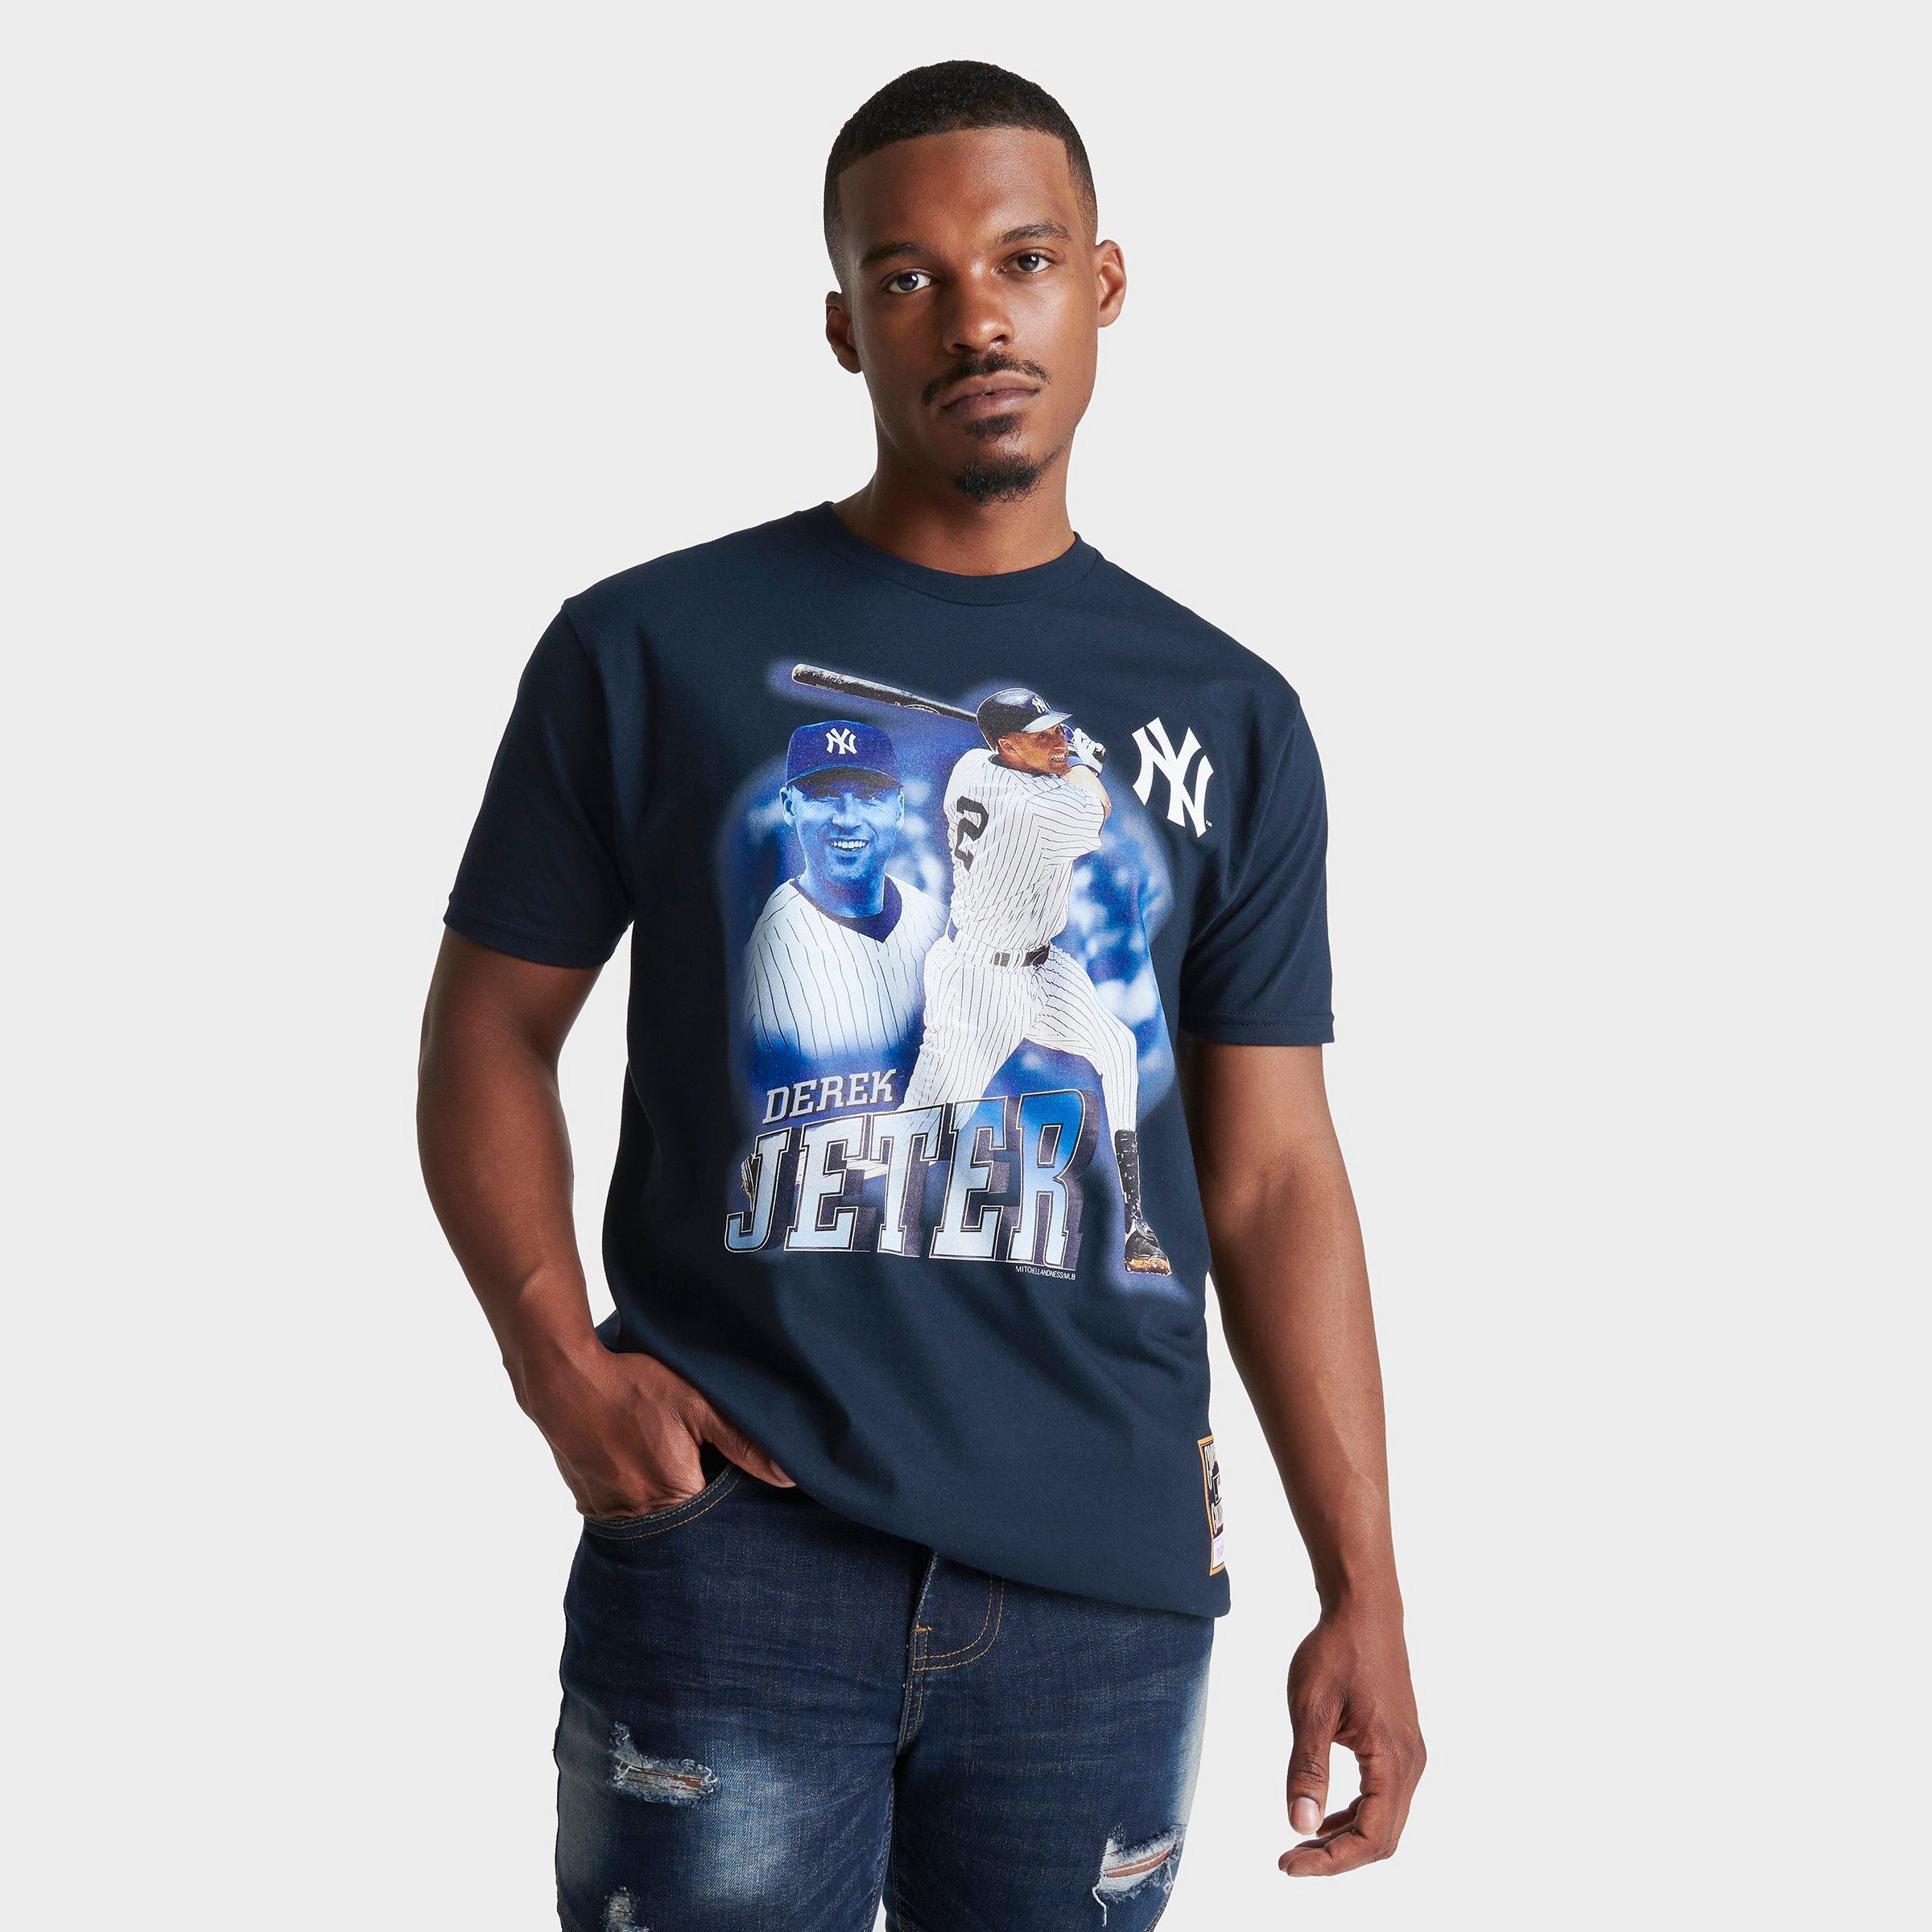 Mitchell and Ness Men's Derek Jeter Swing T-Shirt Navy